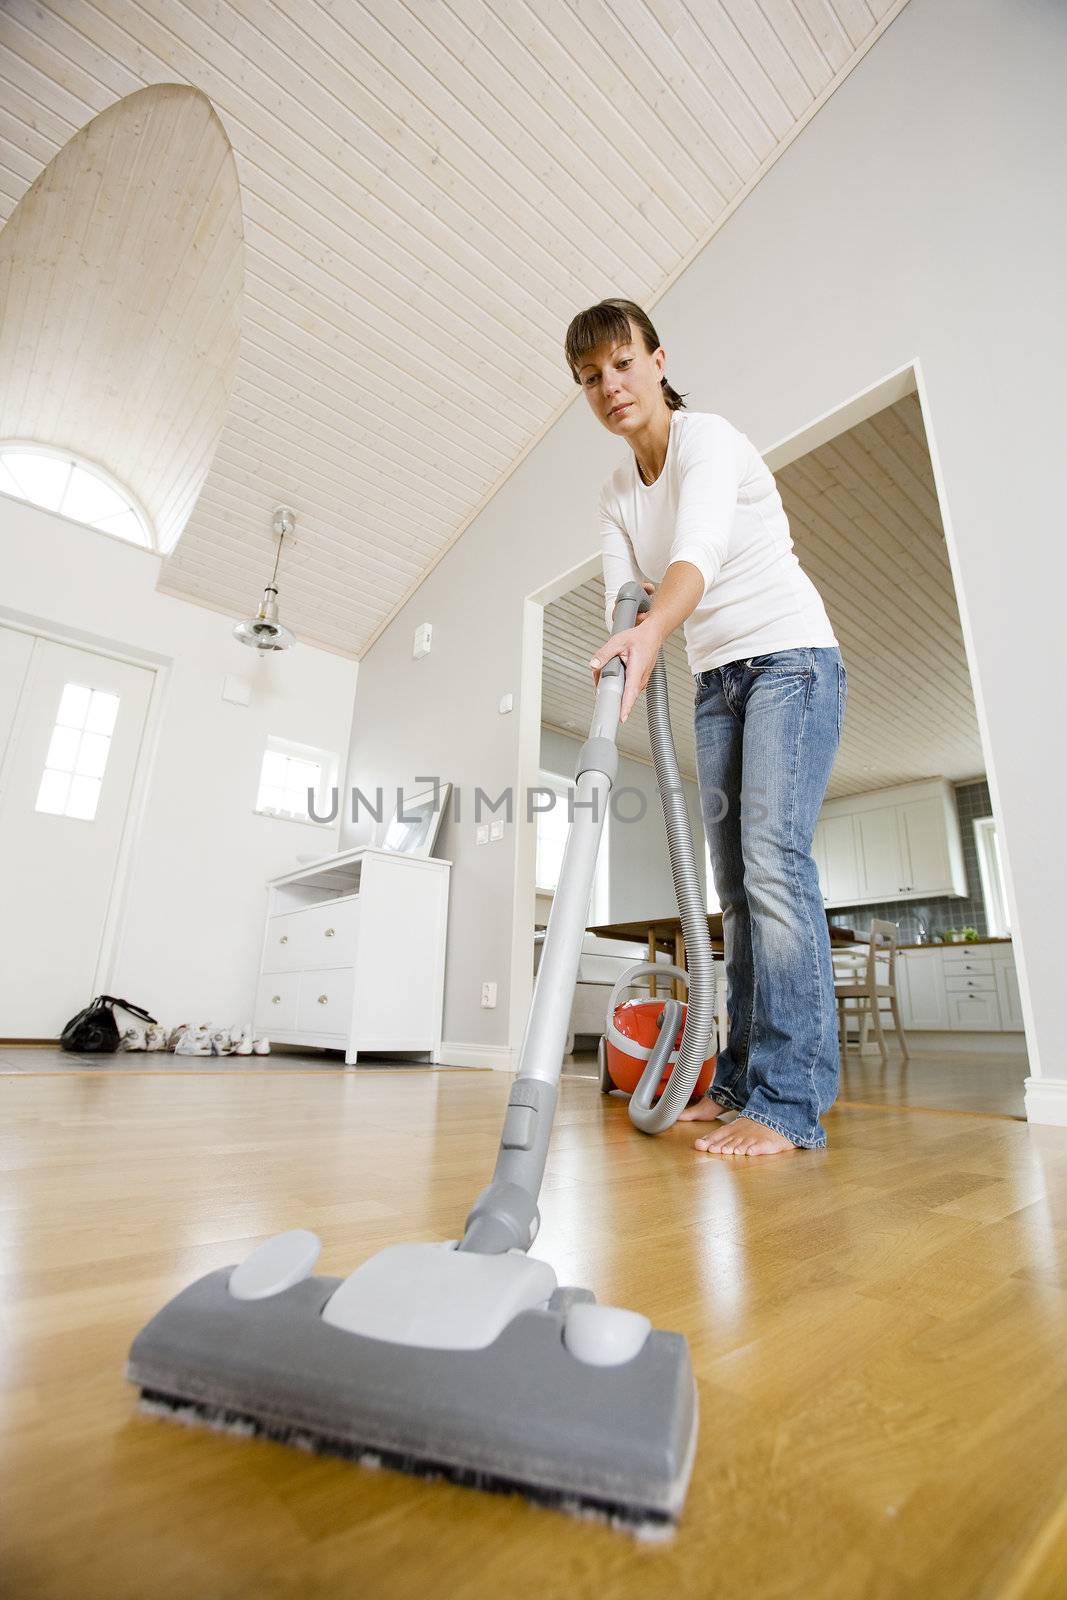 Vacuum Cleaning by gemenacom